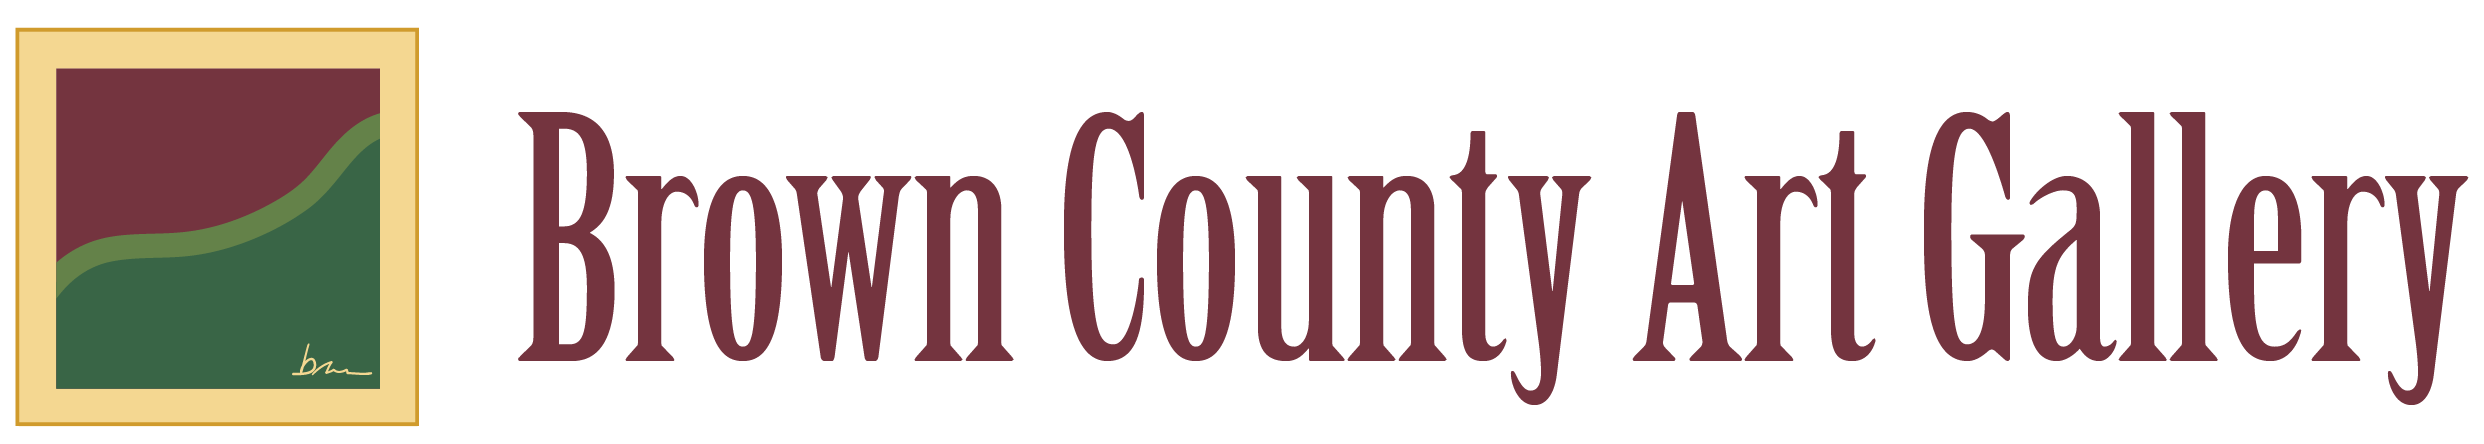 Brown County Art Gallery logo